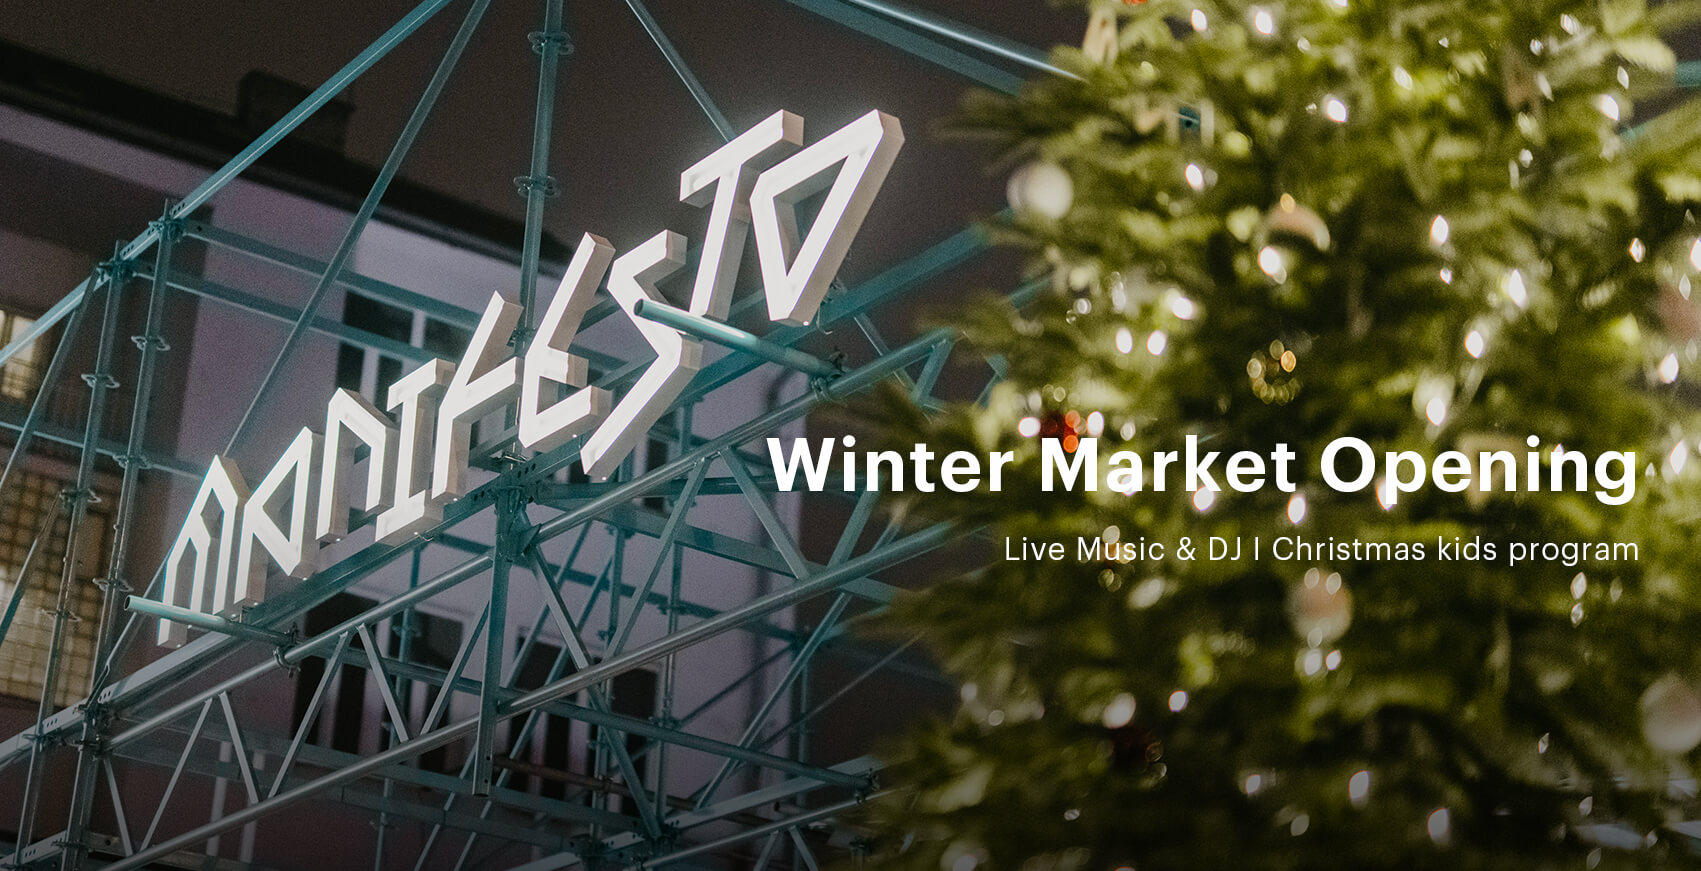 Manifesto Winter Market Opening, 26/11